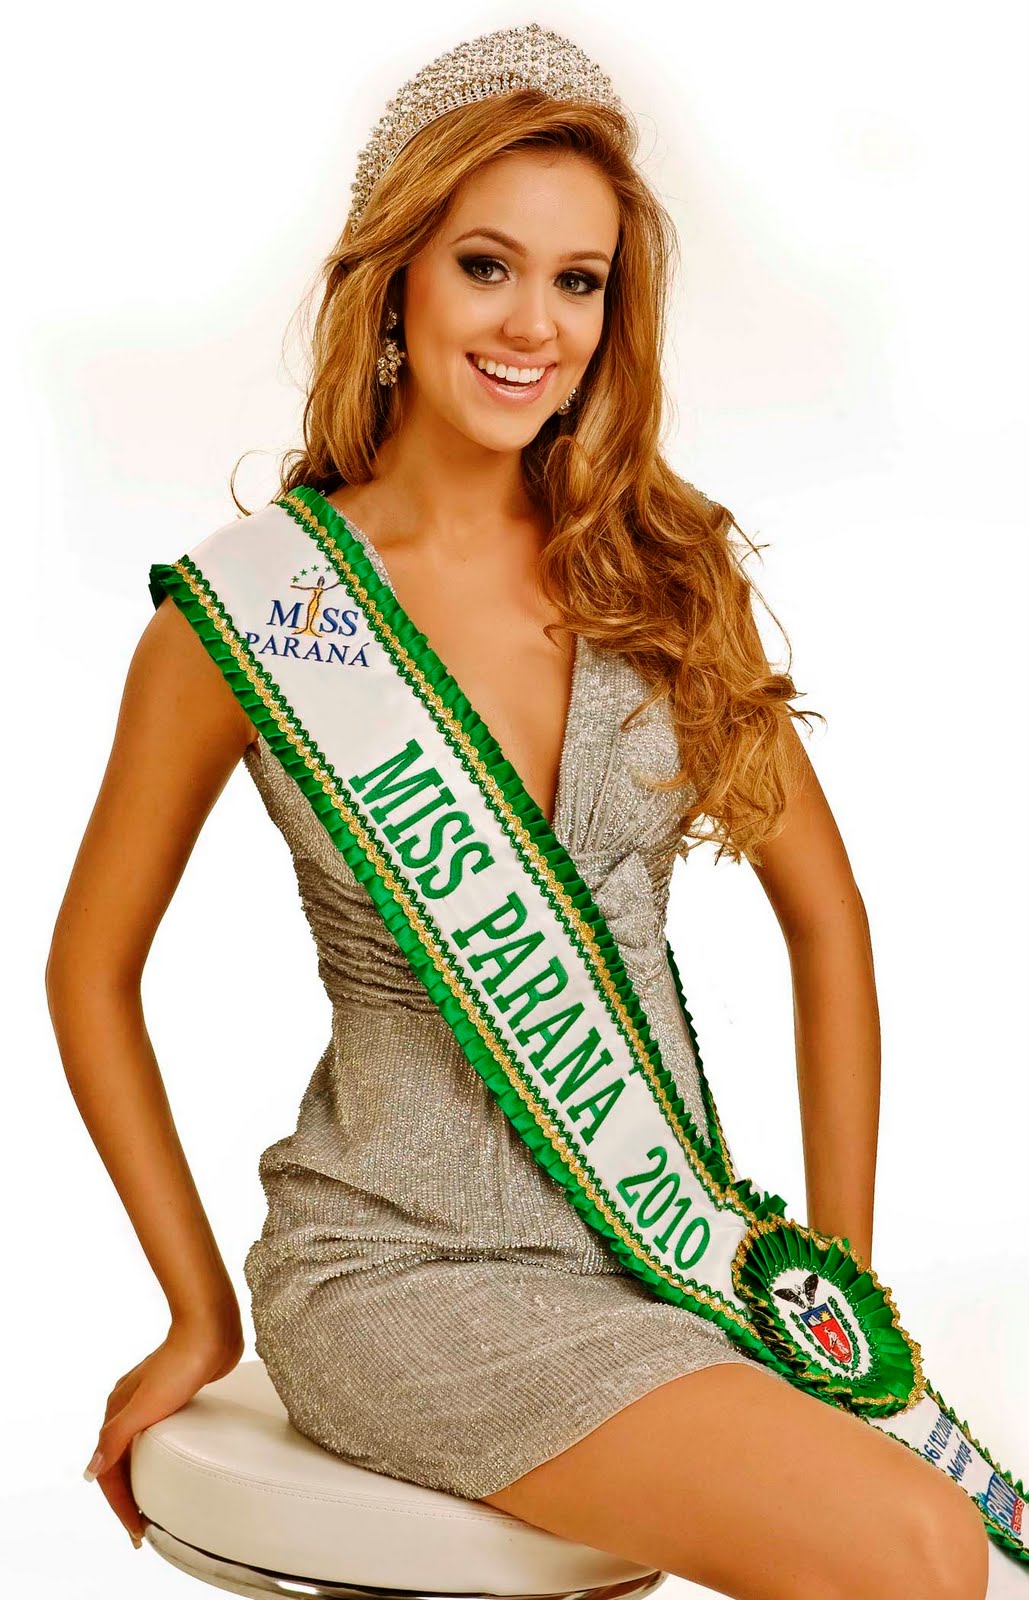 marylia bernardt, miss brasil continente americano 2010. Os4zng2z